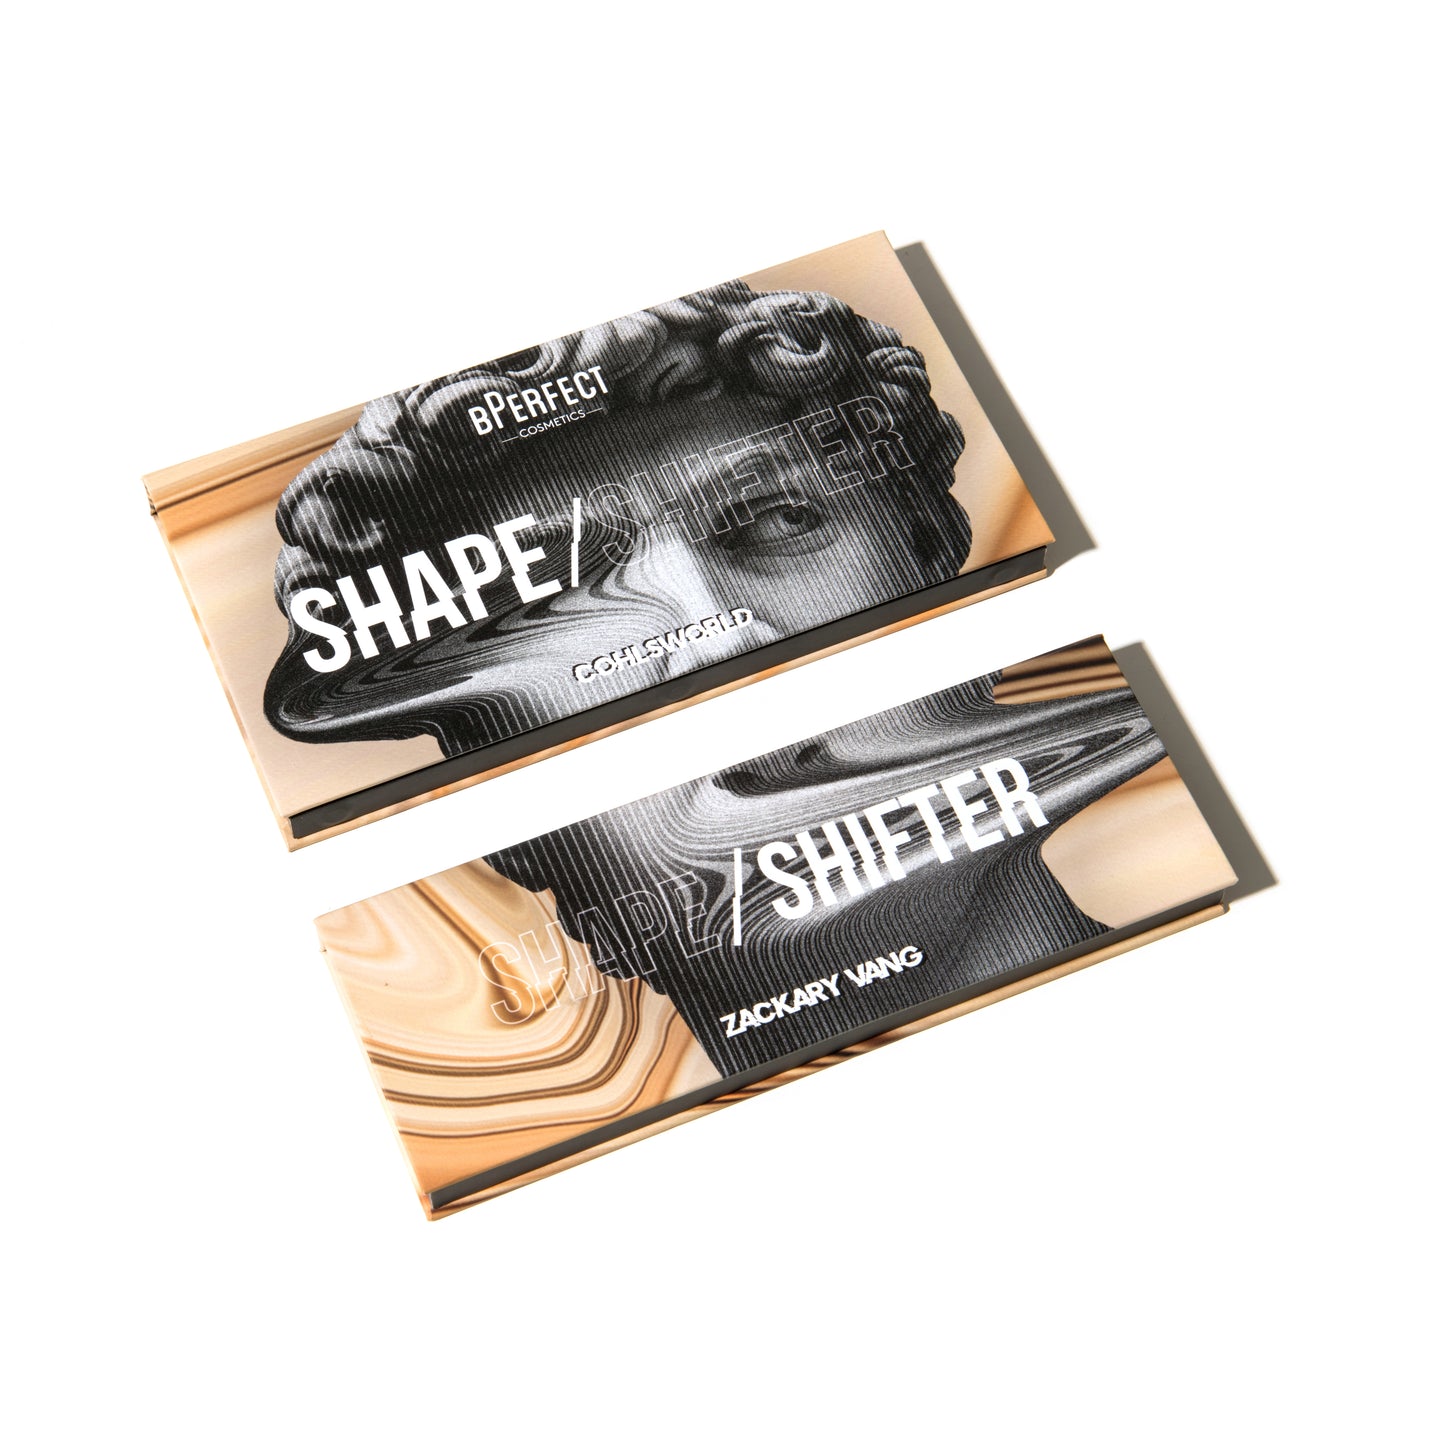 Shape Shifter Face Palette - BPerfect x Zackary Vang and Cohlsworld